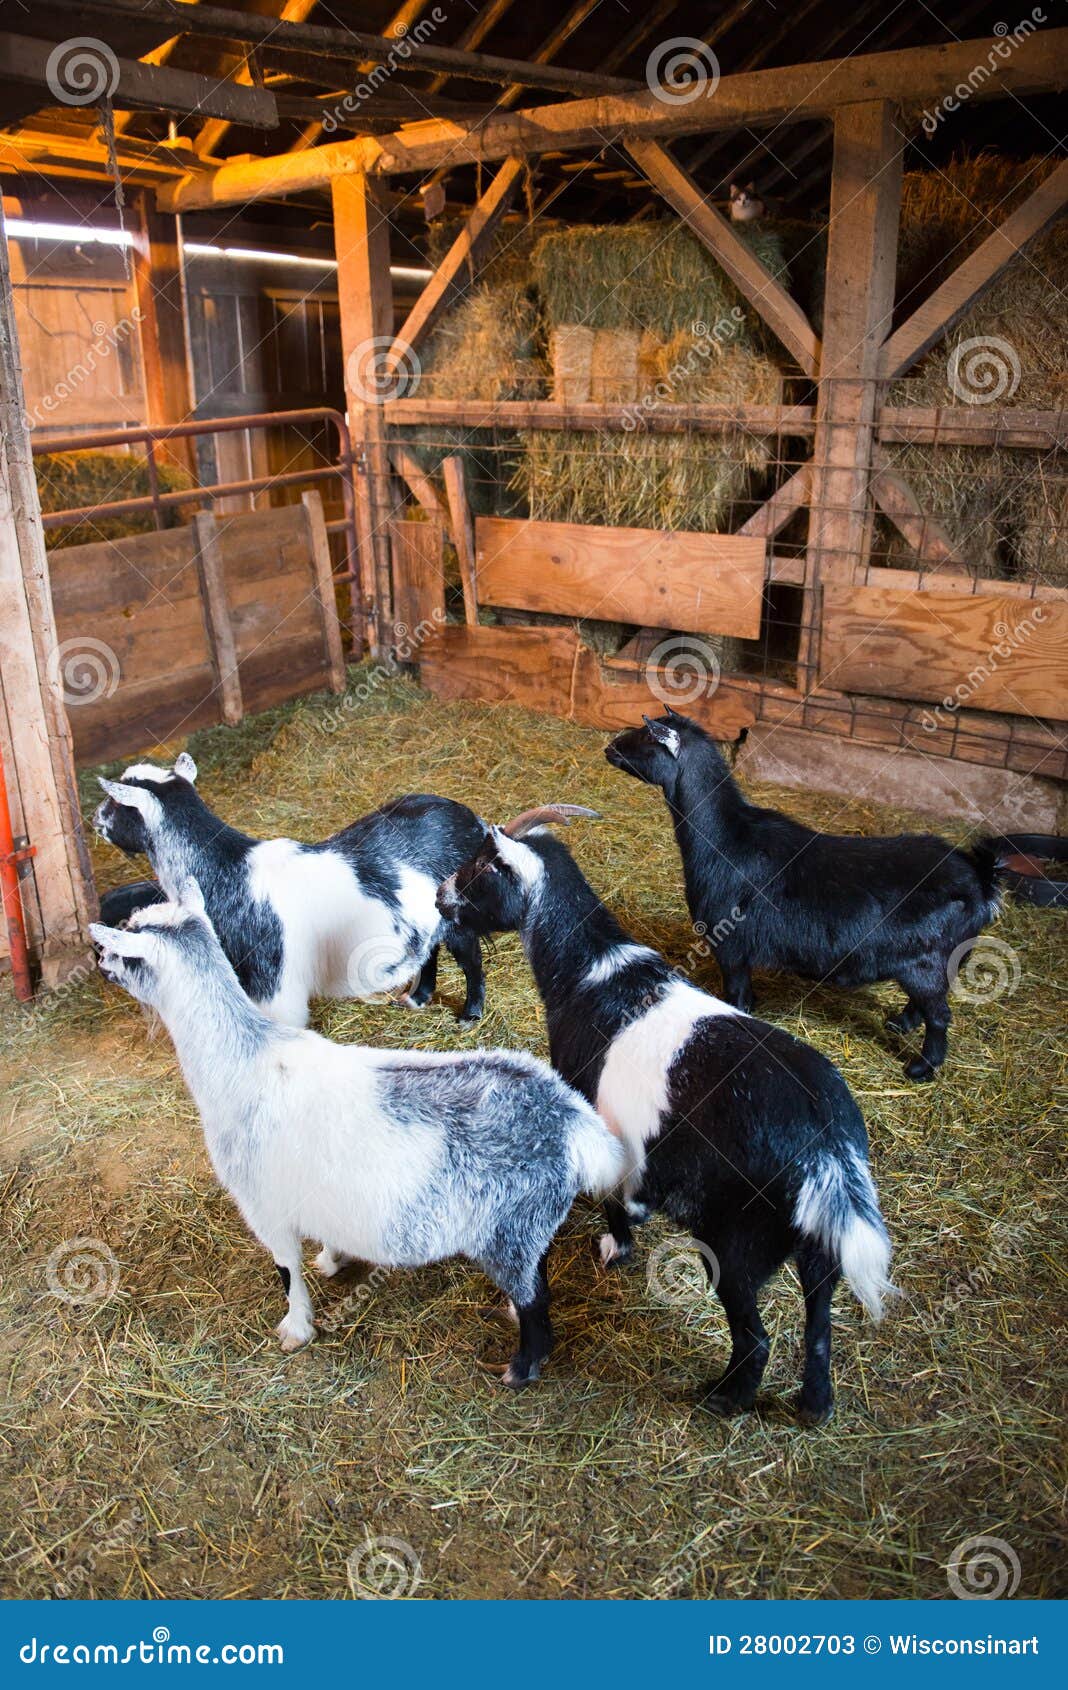 Farm Goats Inside a Barn stock image. Image of animals 